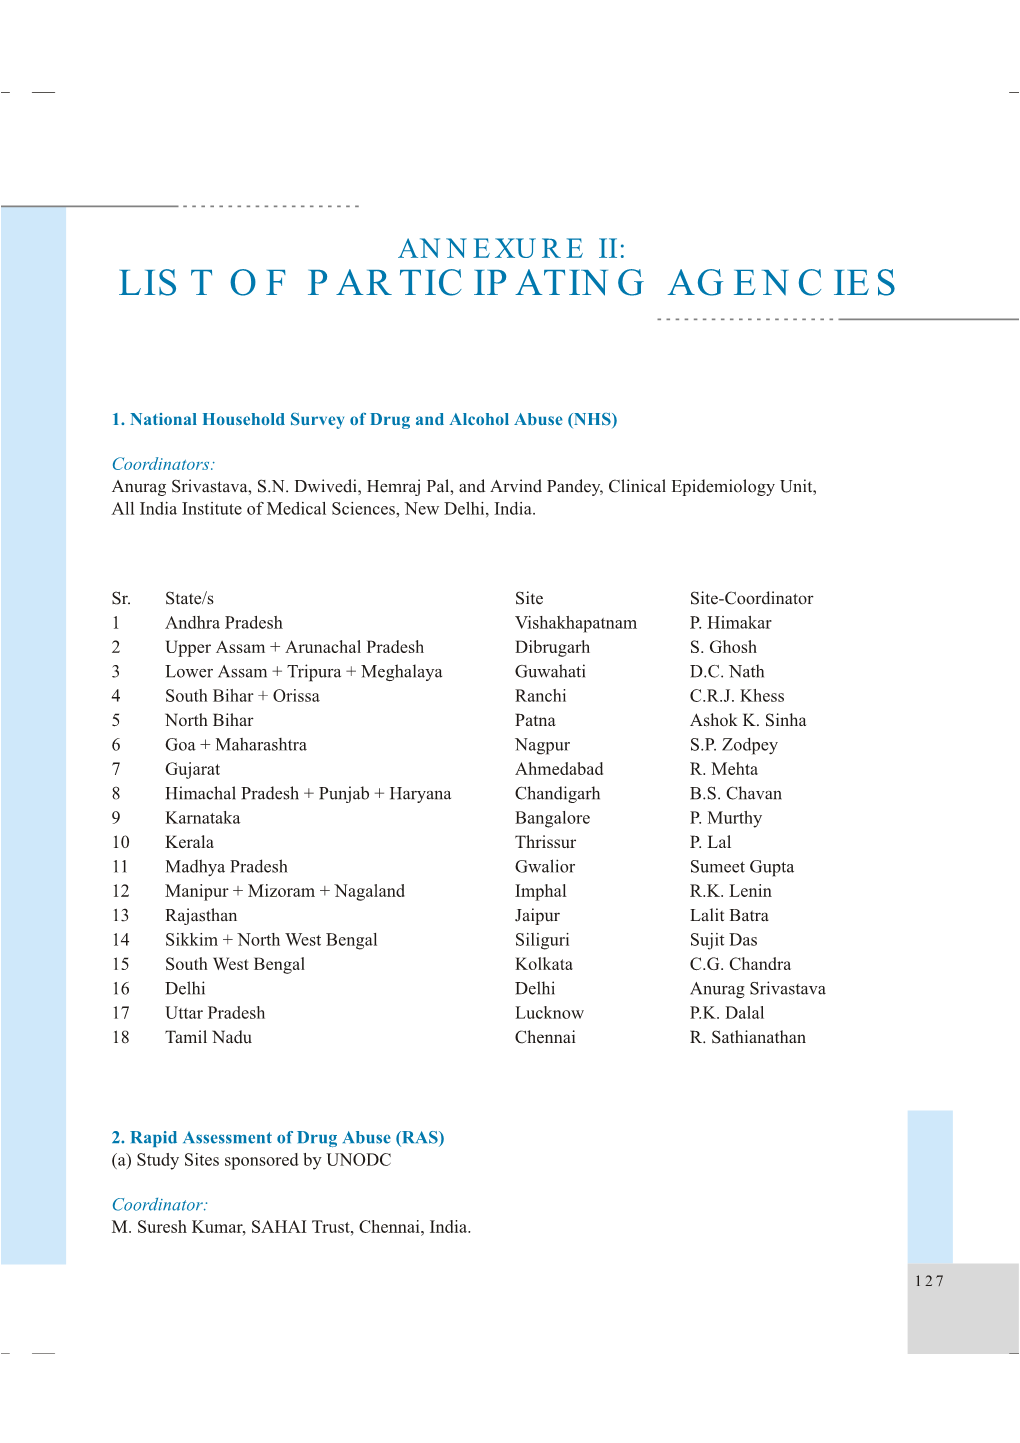 List of Participating Agencies